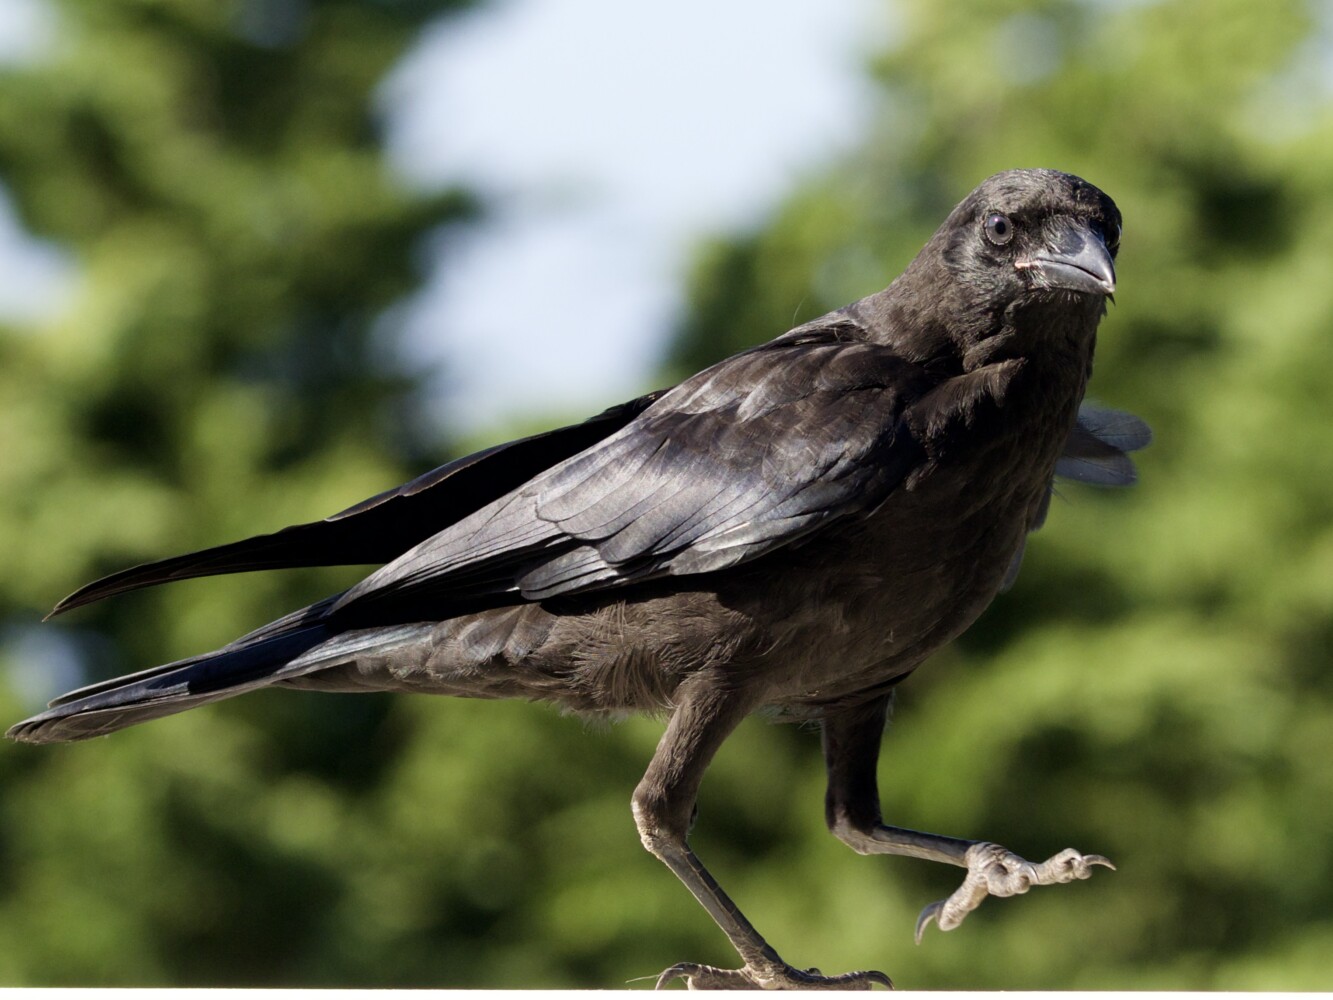 Juvenile Crow walking on fence